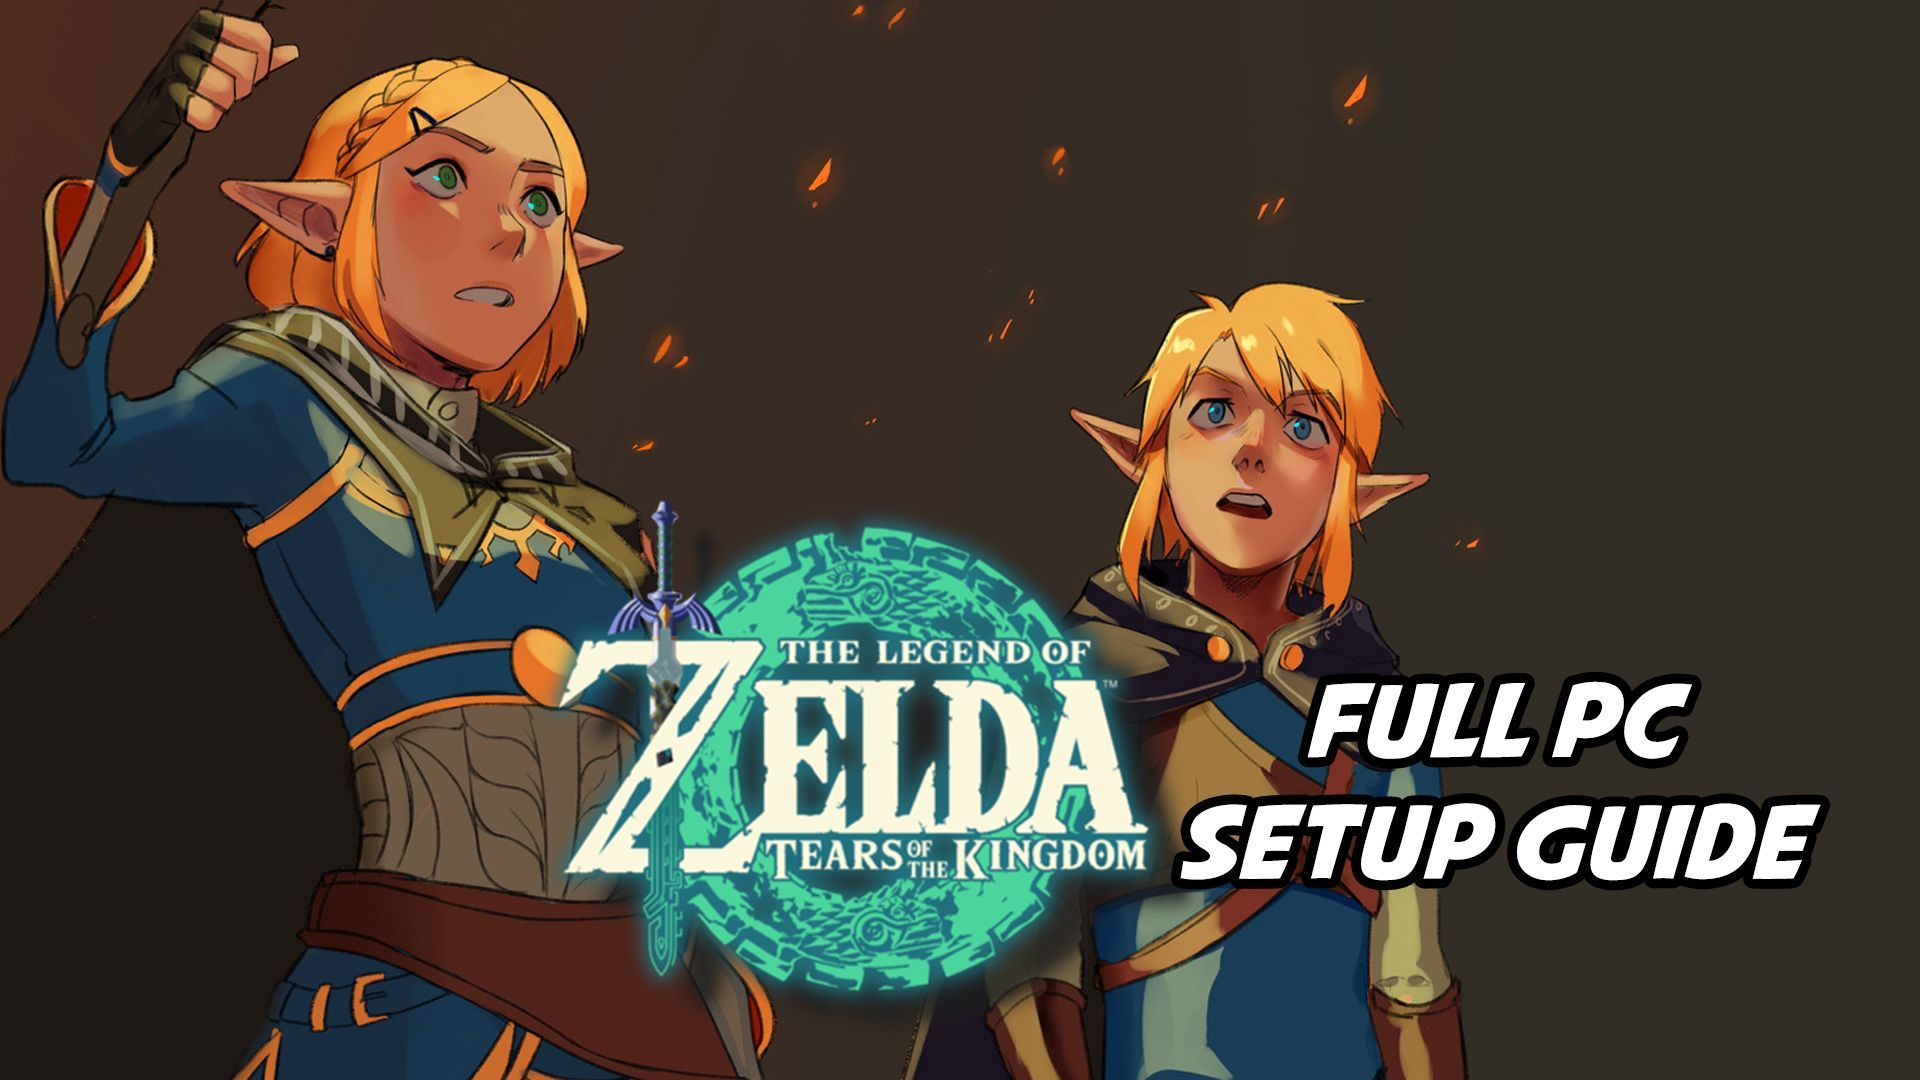 How to Setup & Install The Legend of Zelda Tears of the Kingdom on